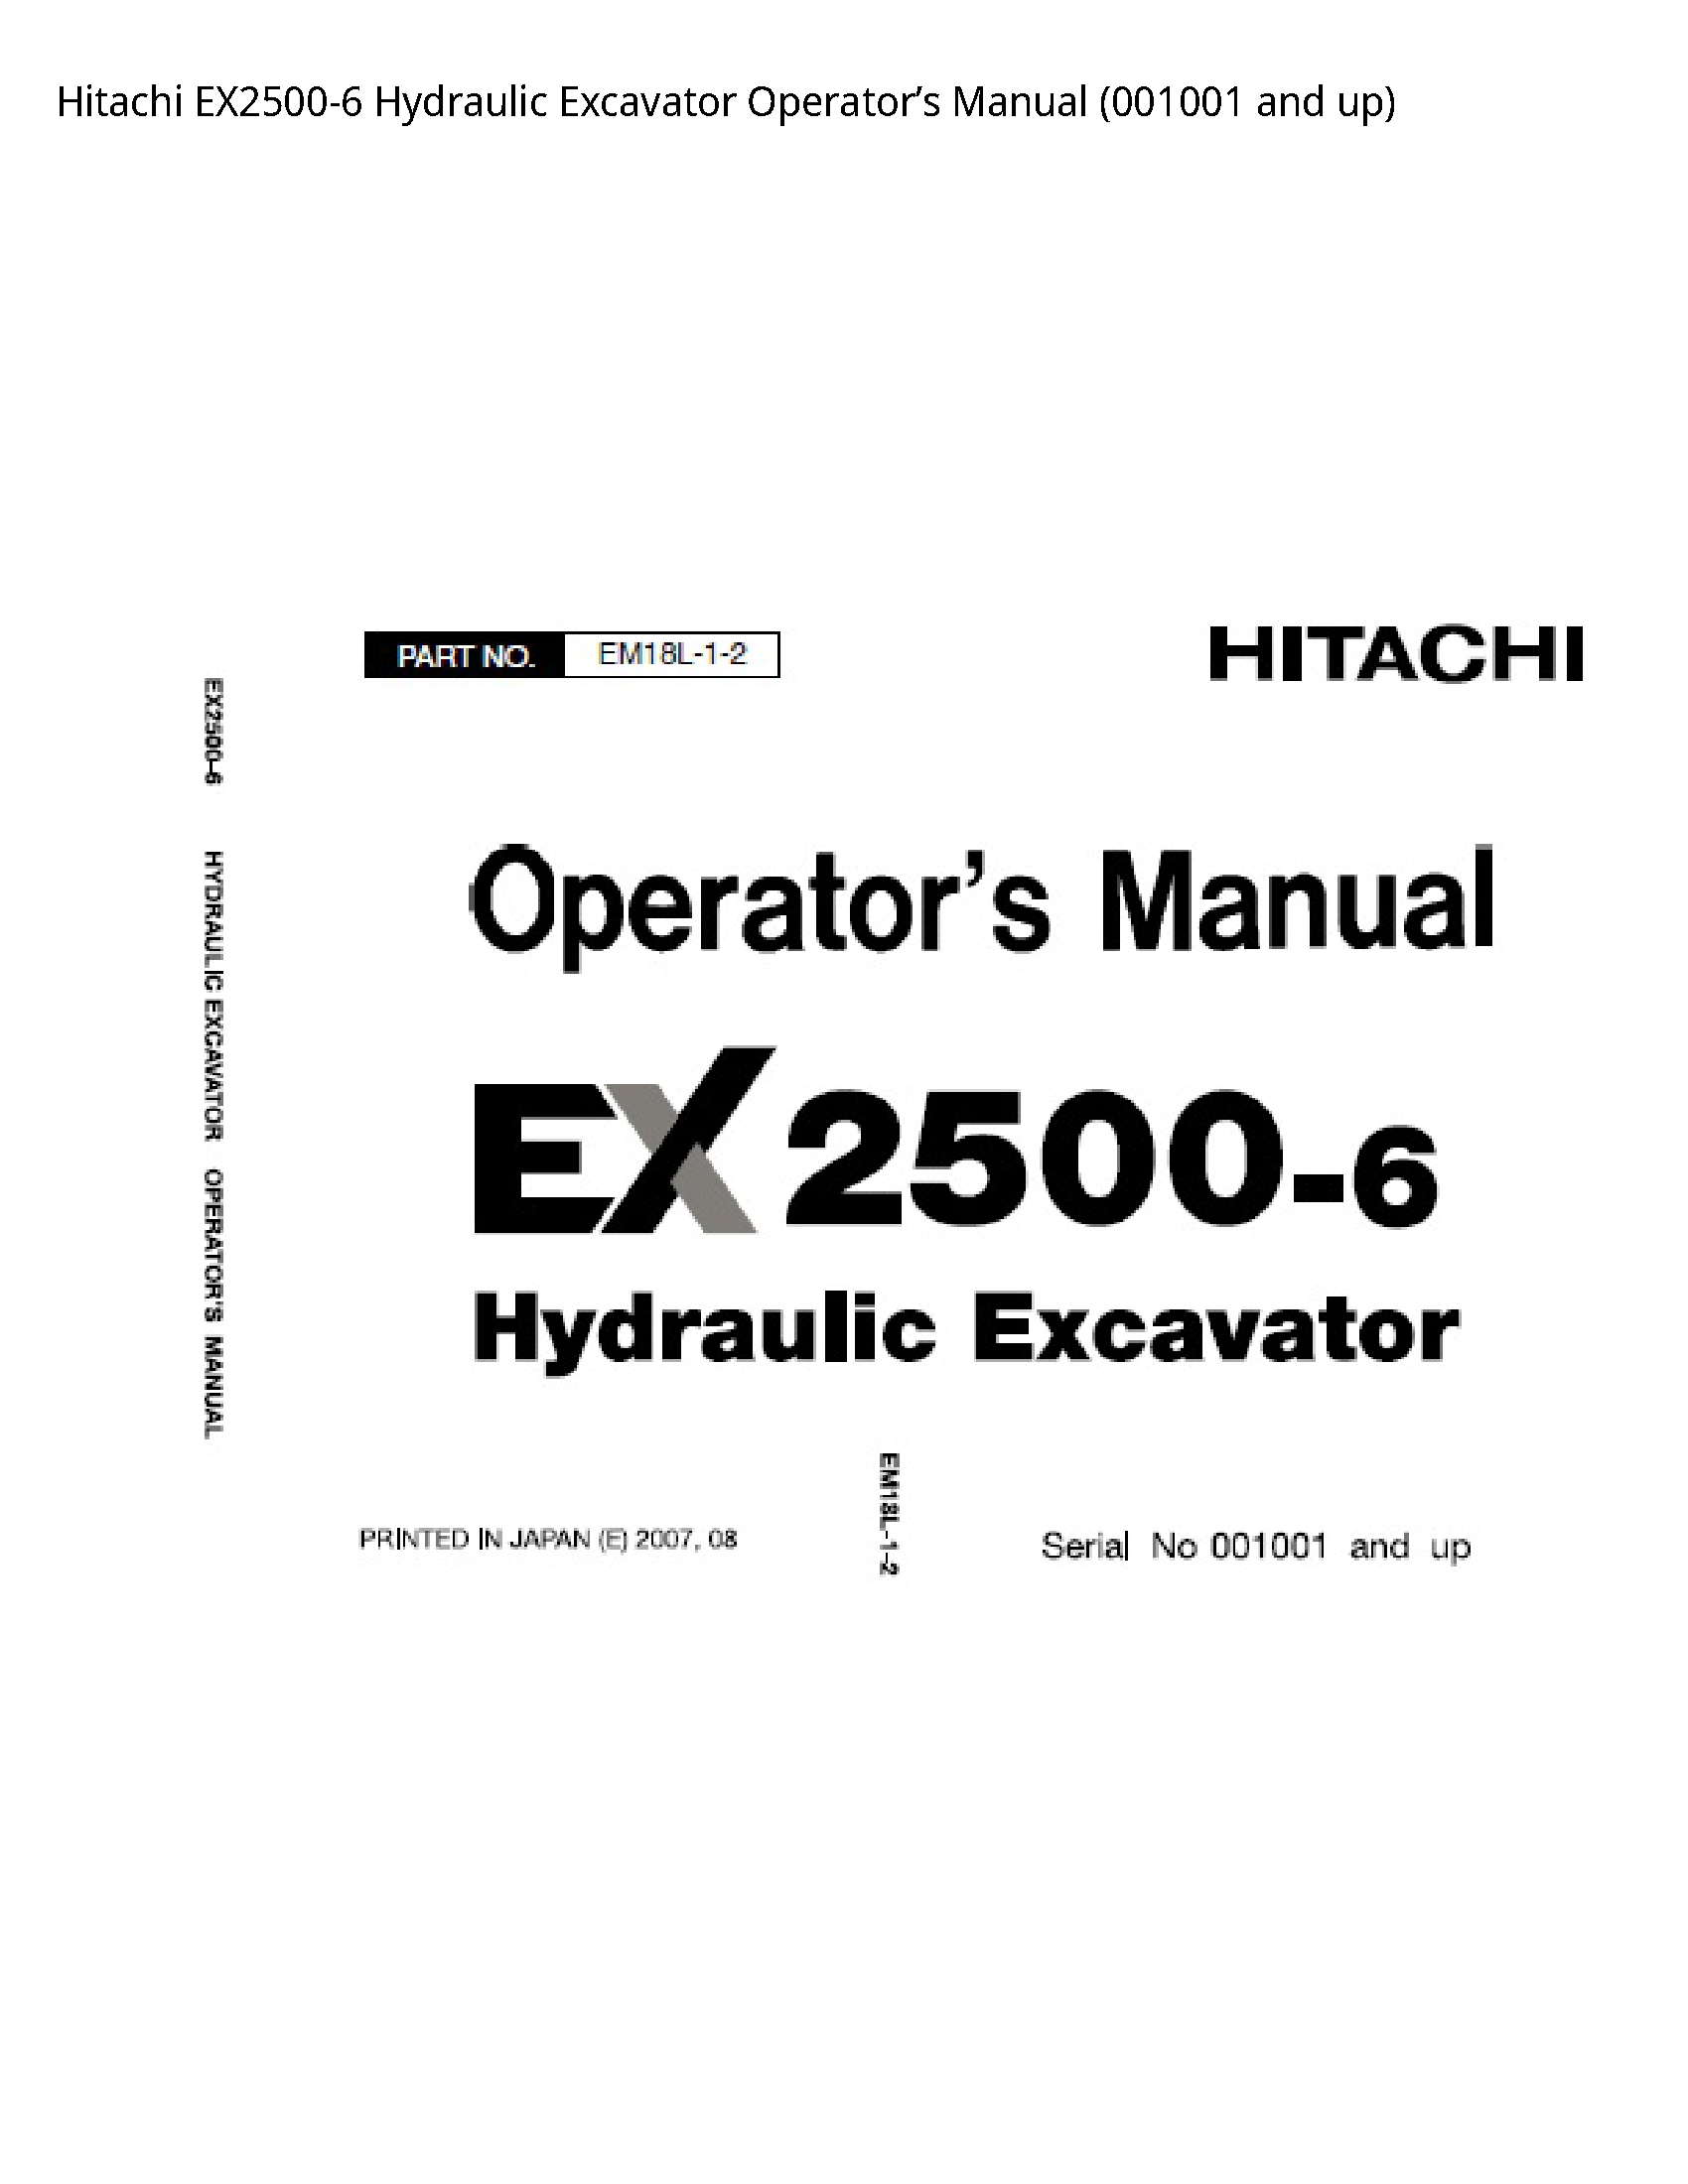 Hitachi EX2500-6 Hydraulic Excavator Operator’s manual